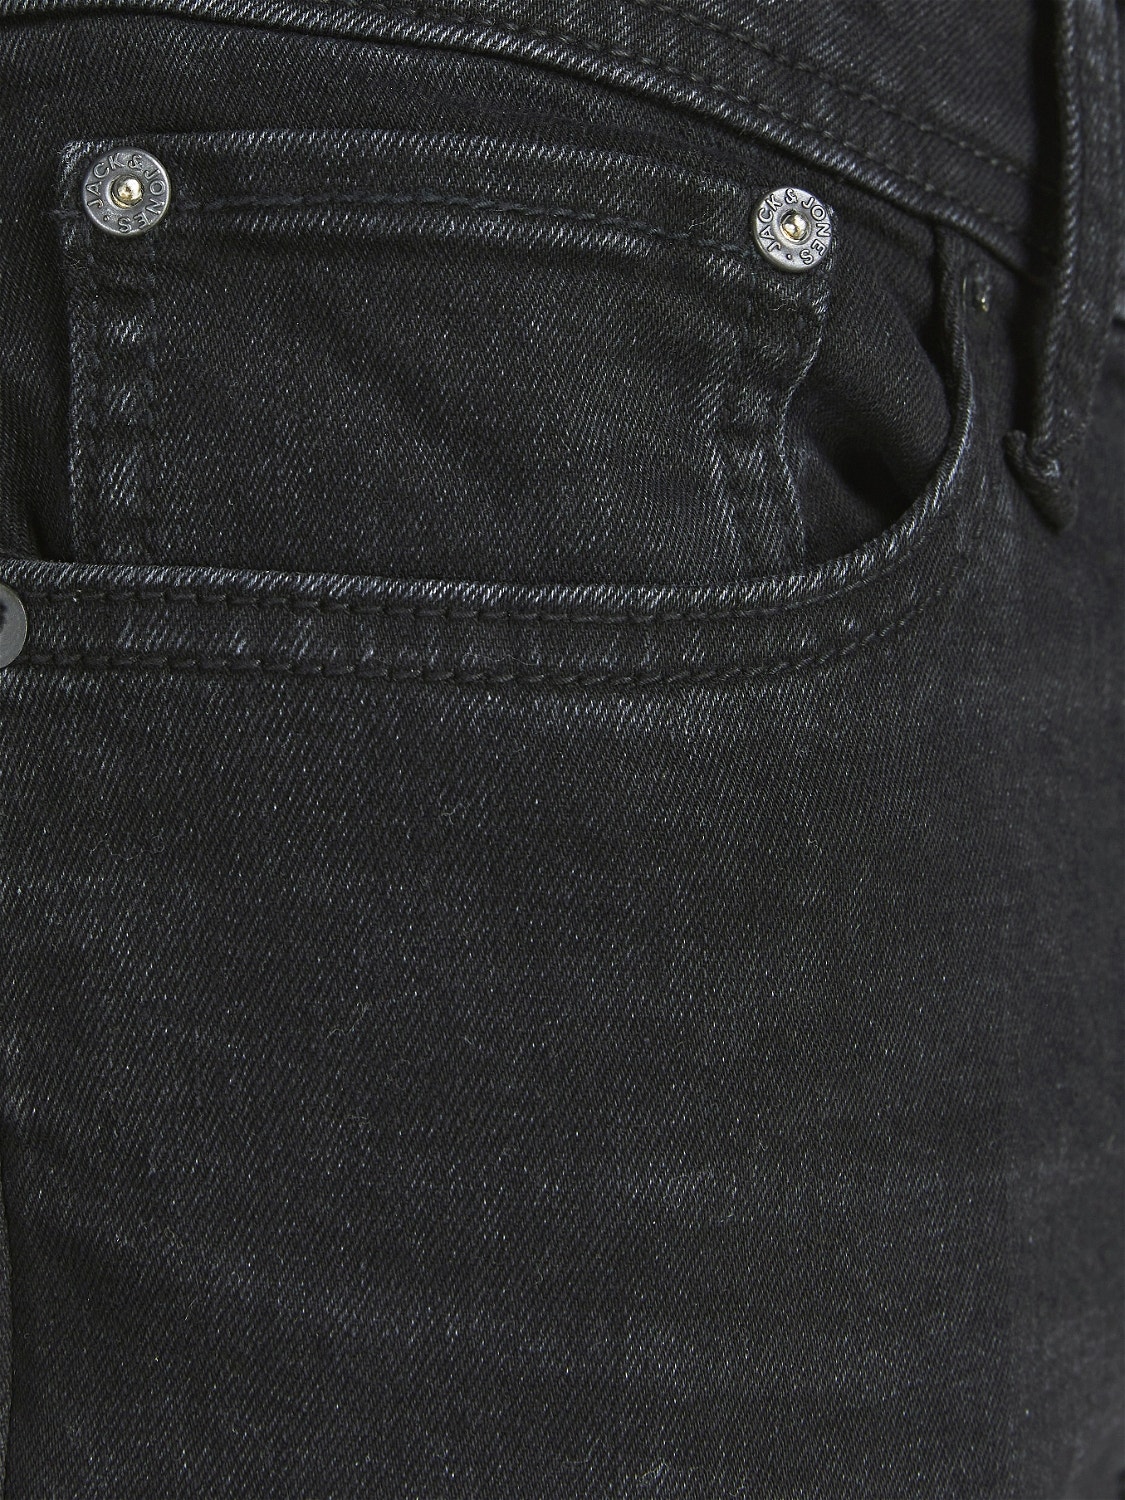 JJIGLENN JJORIGINAL AM 809 Slim fit jeans | Black | Jack & Jones®